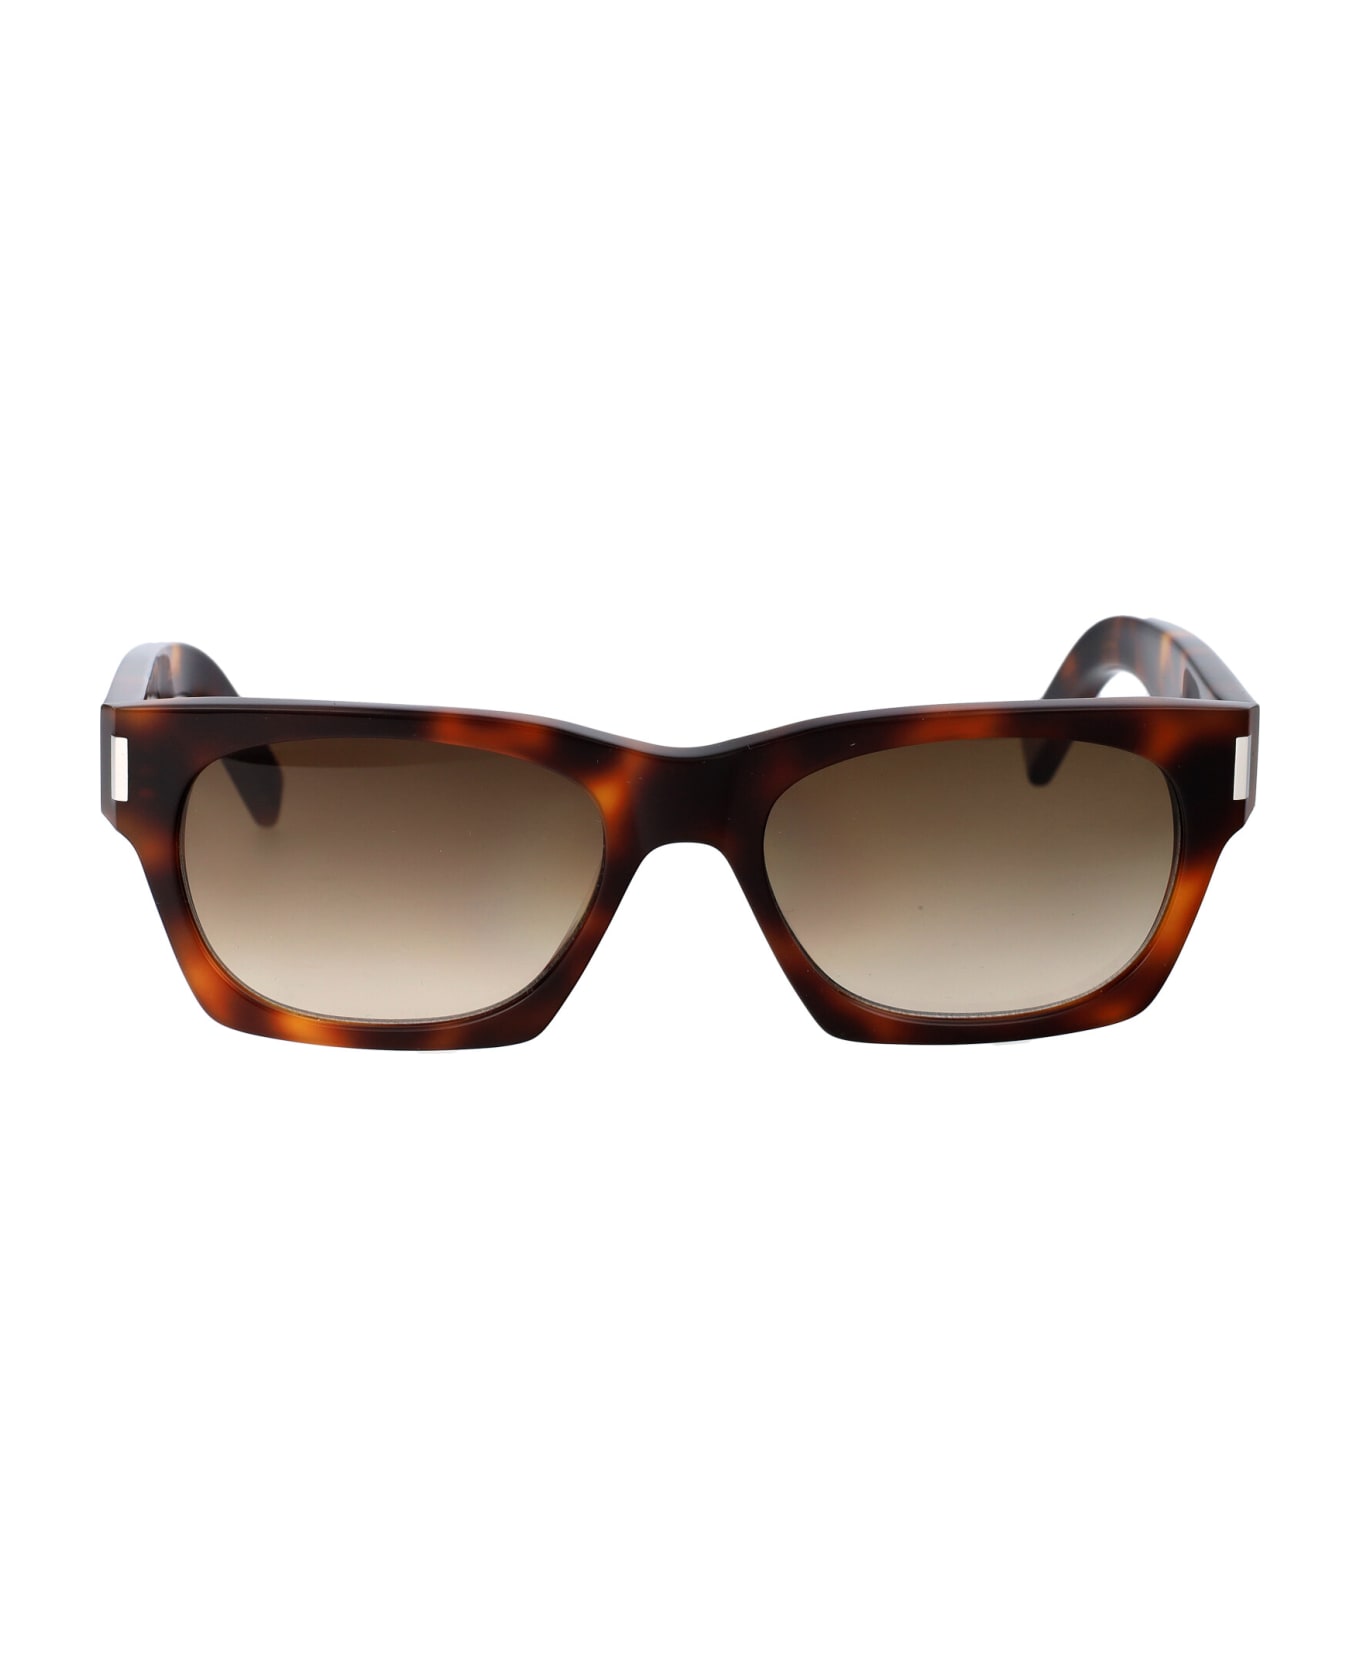 Saint Laurent Eyewear Sl 402 Sunglasses - 019 HAVANA HAVANA BROWN サングラス